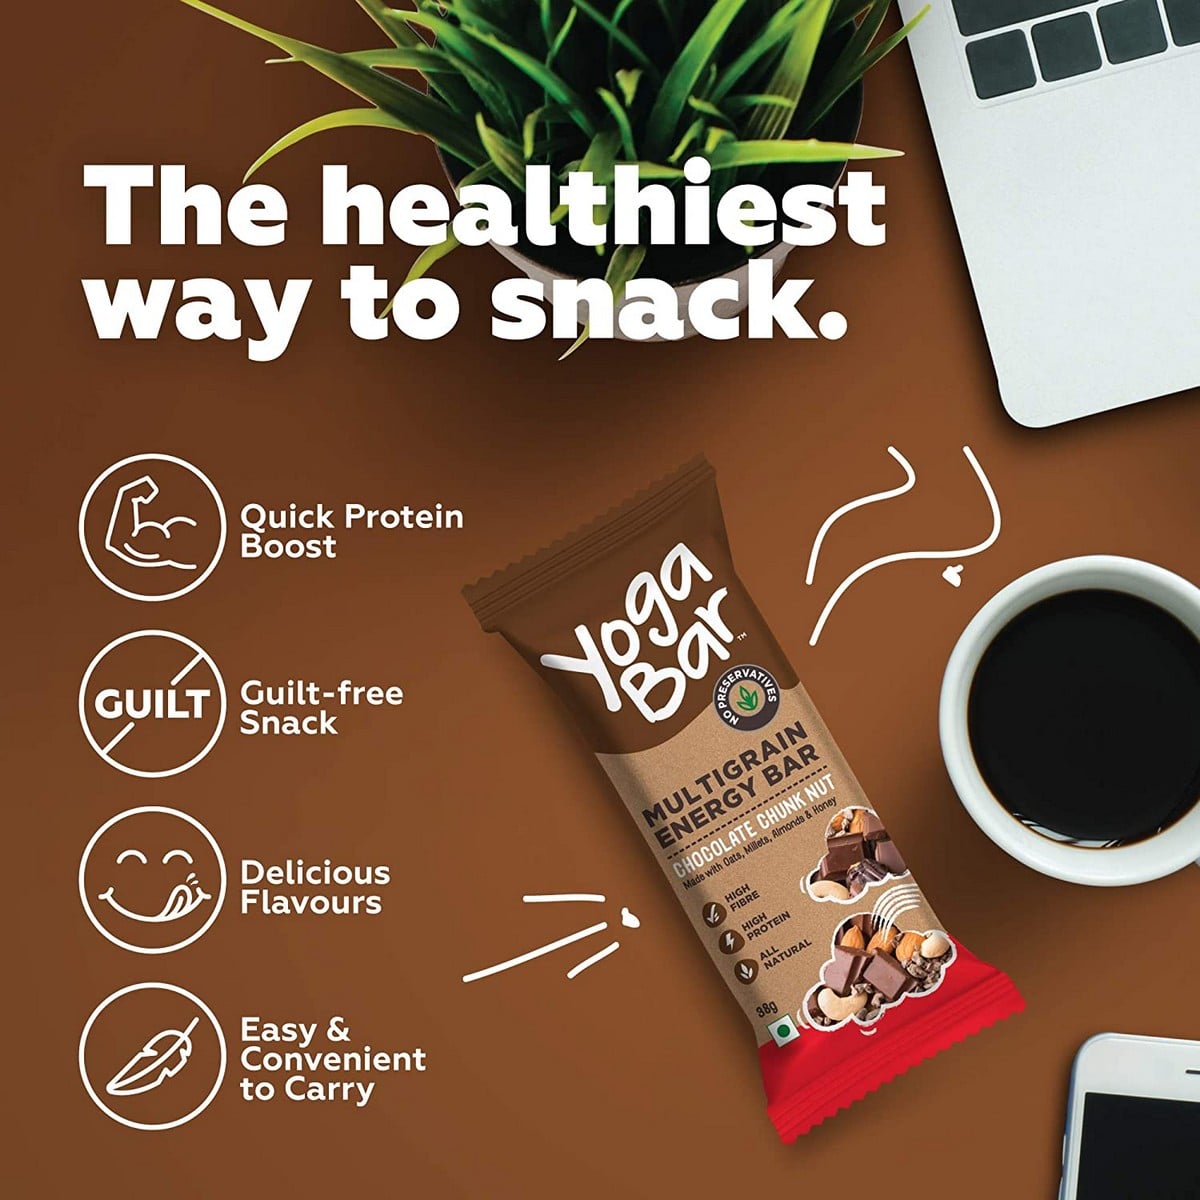 Yogabar Breakfast Protein Bar Yoga Bar Multigrain Energy Bar - Chocolate  Chunk Nut, Healthy, High In Protein